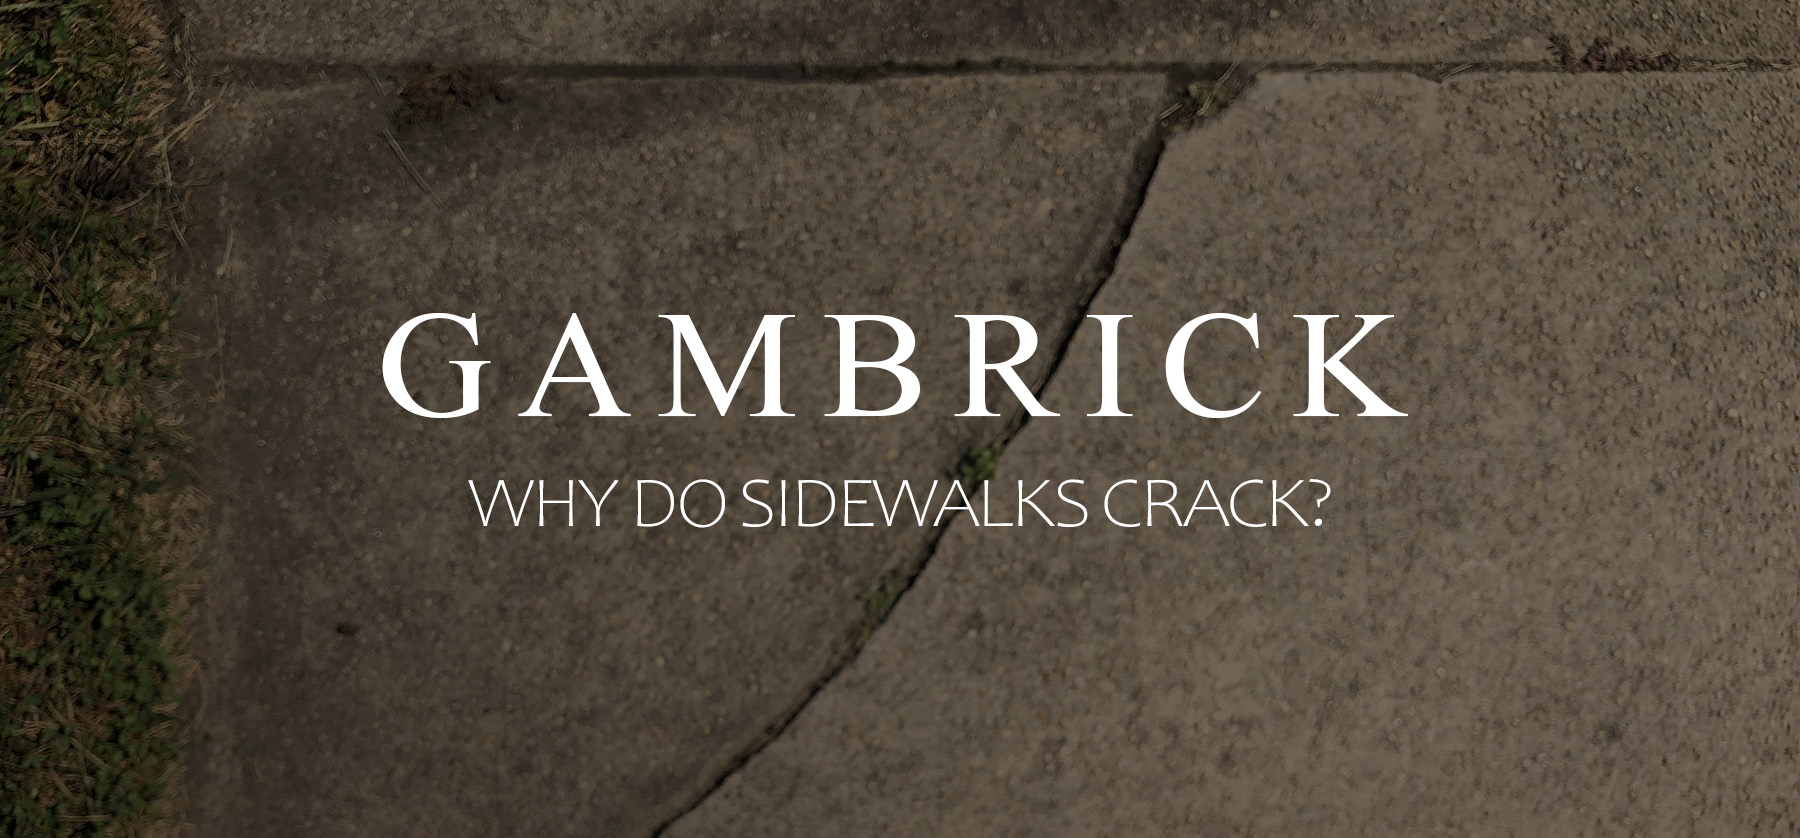 why do sidewalks crack banner 1.0